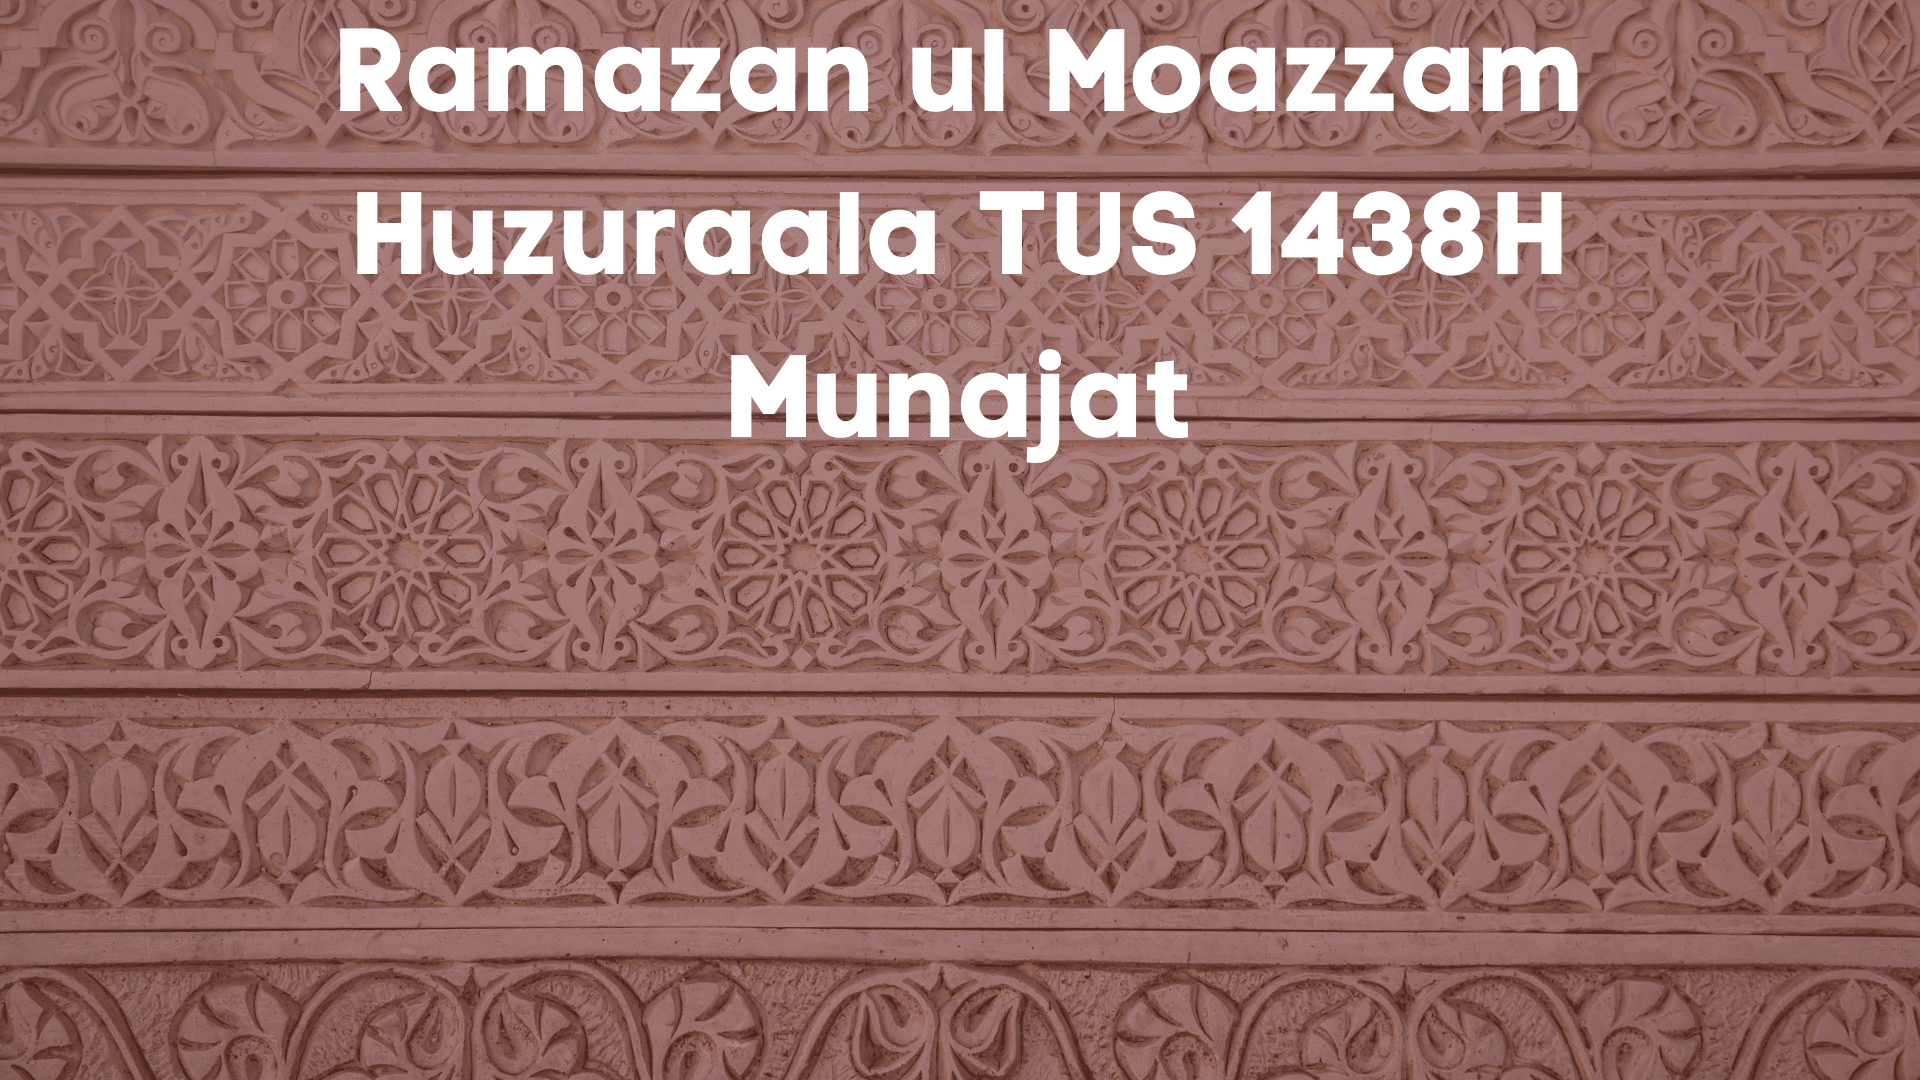 Ramazan ul Moazzam Huzuraala TUS 1438H Munajat